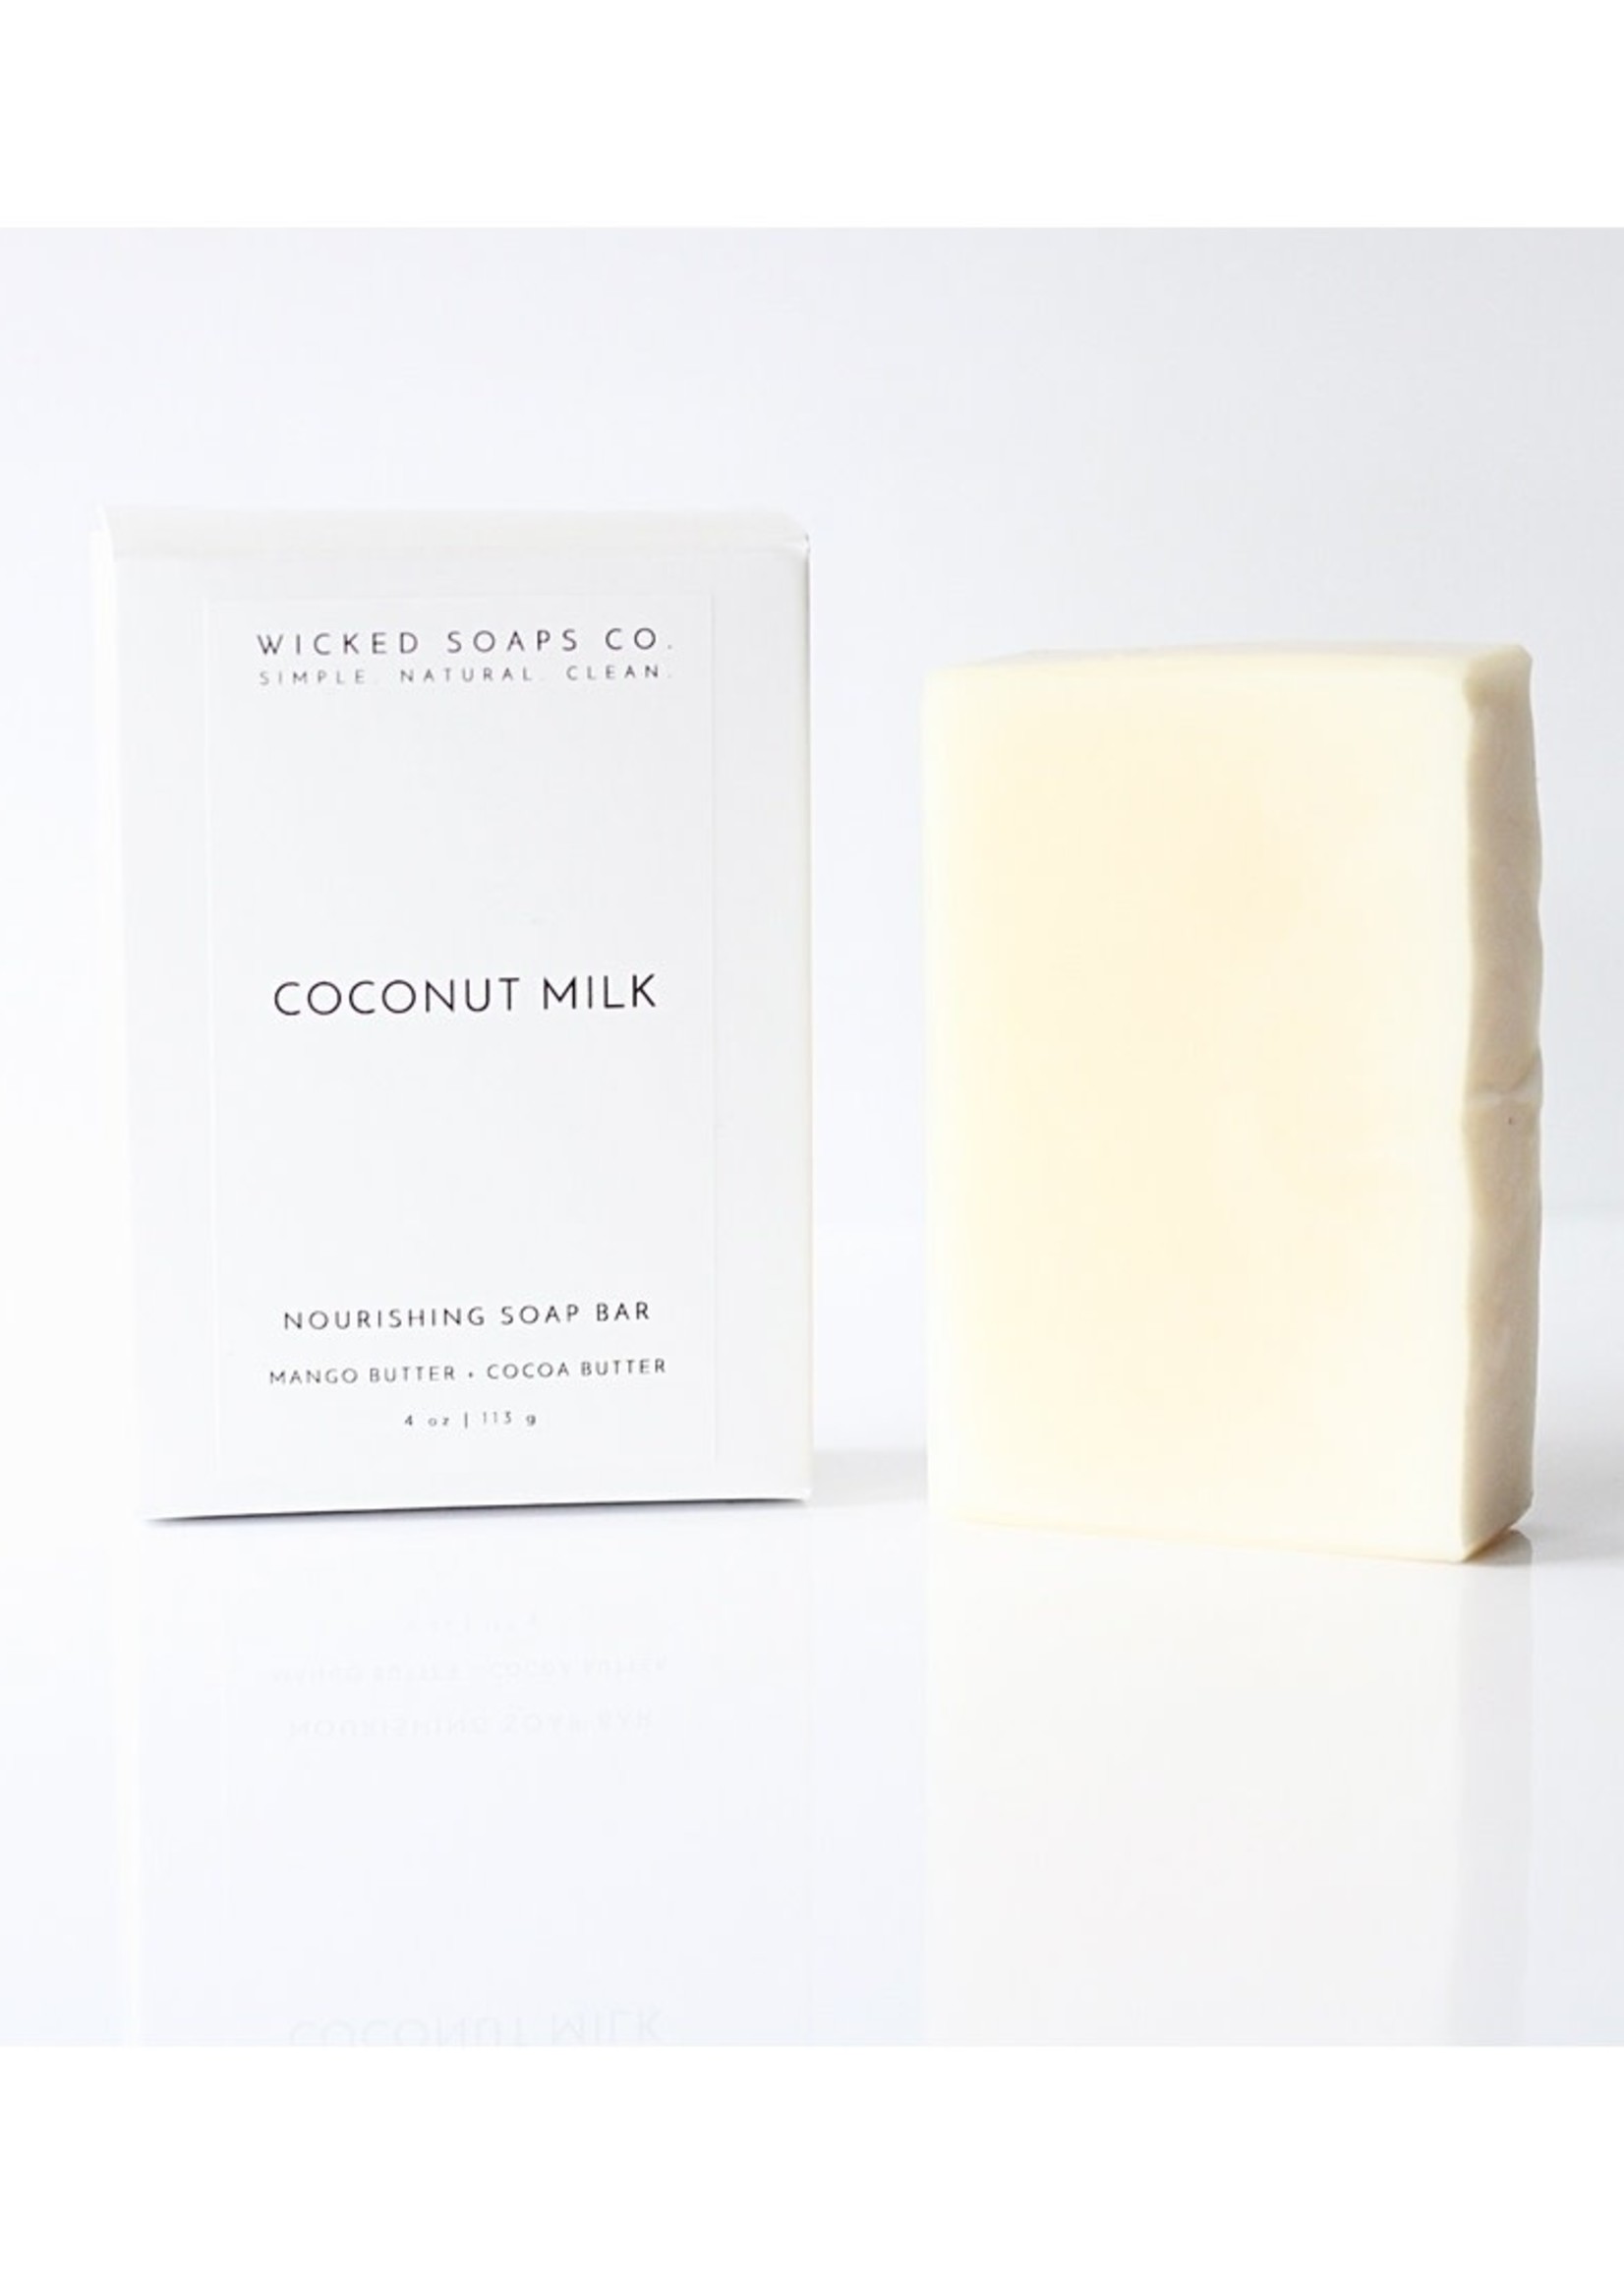 Wicked Soaps Co. Coconut Milk Soap